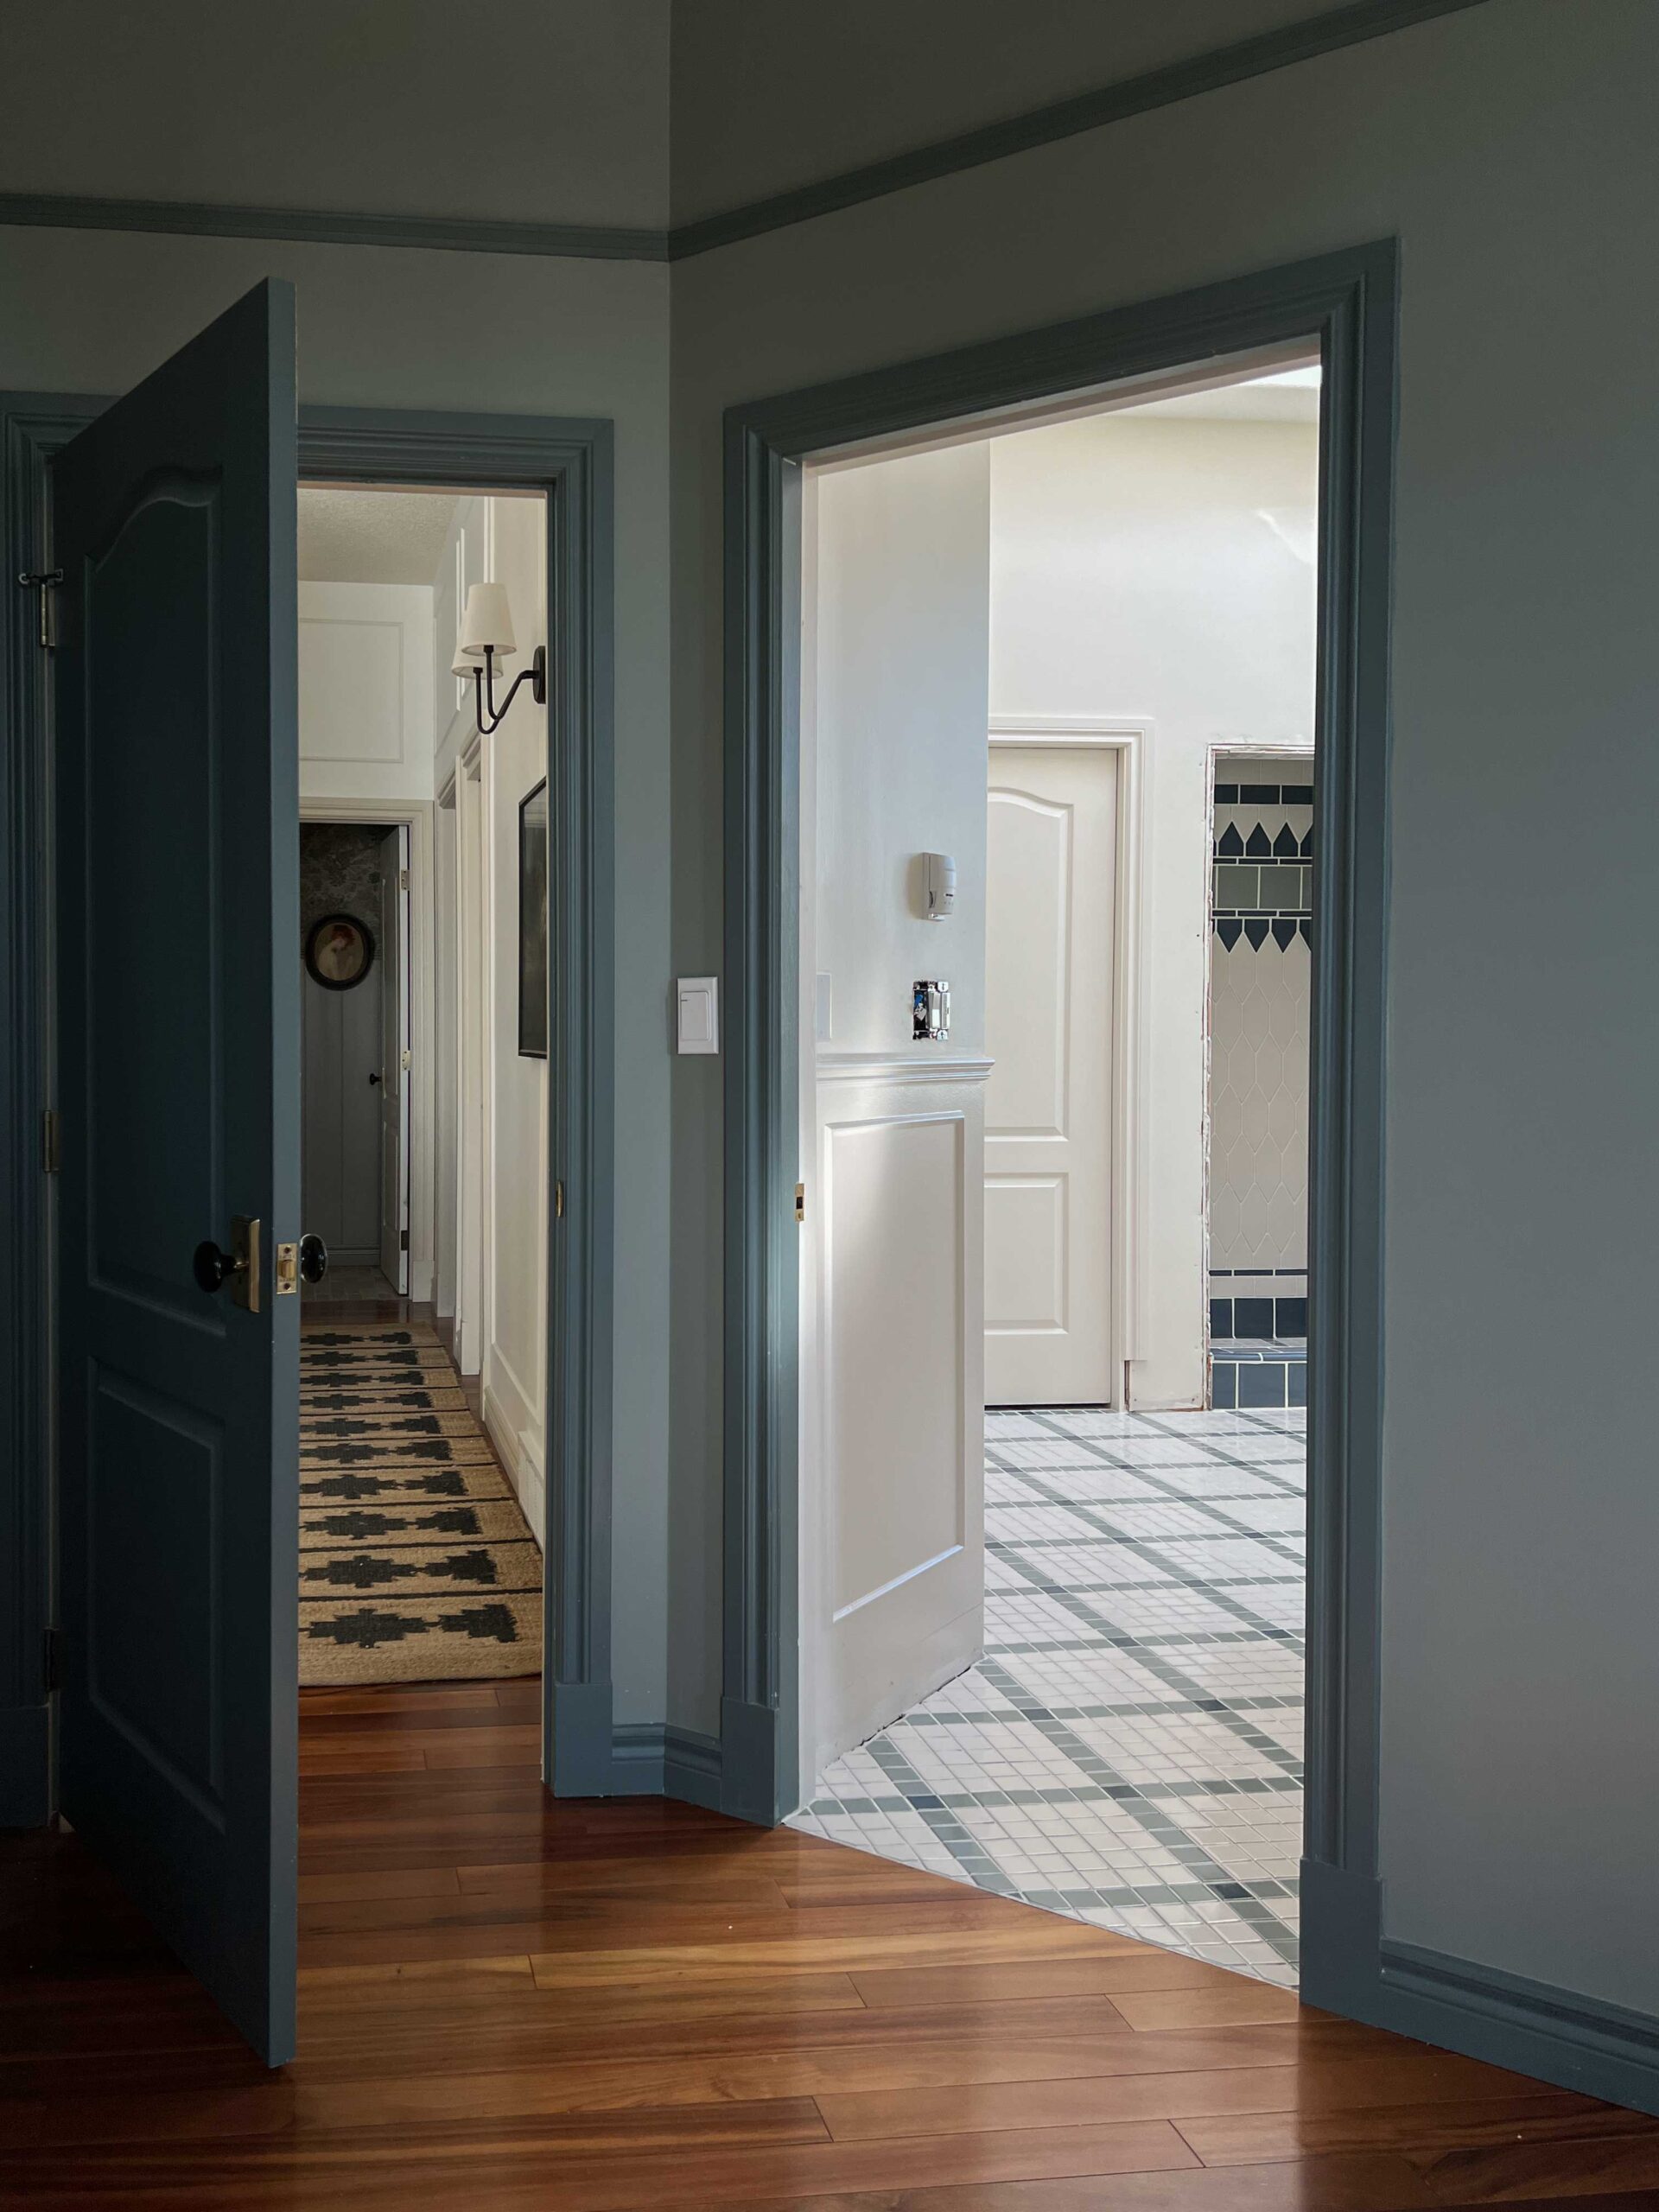 View through doorway into bathroom and hallway from blue bedroom